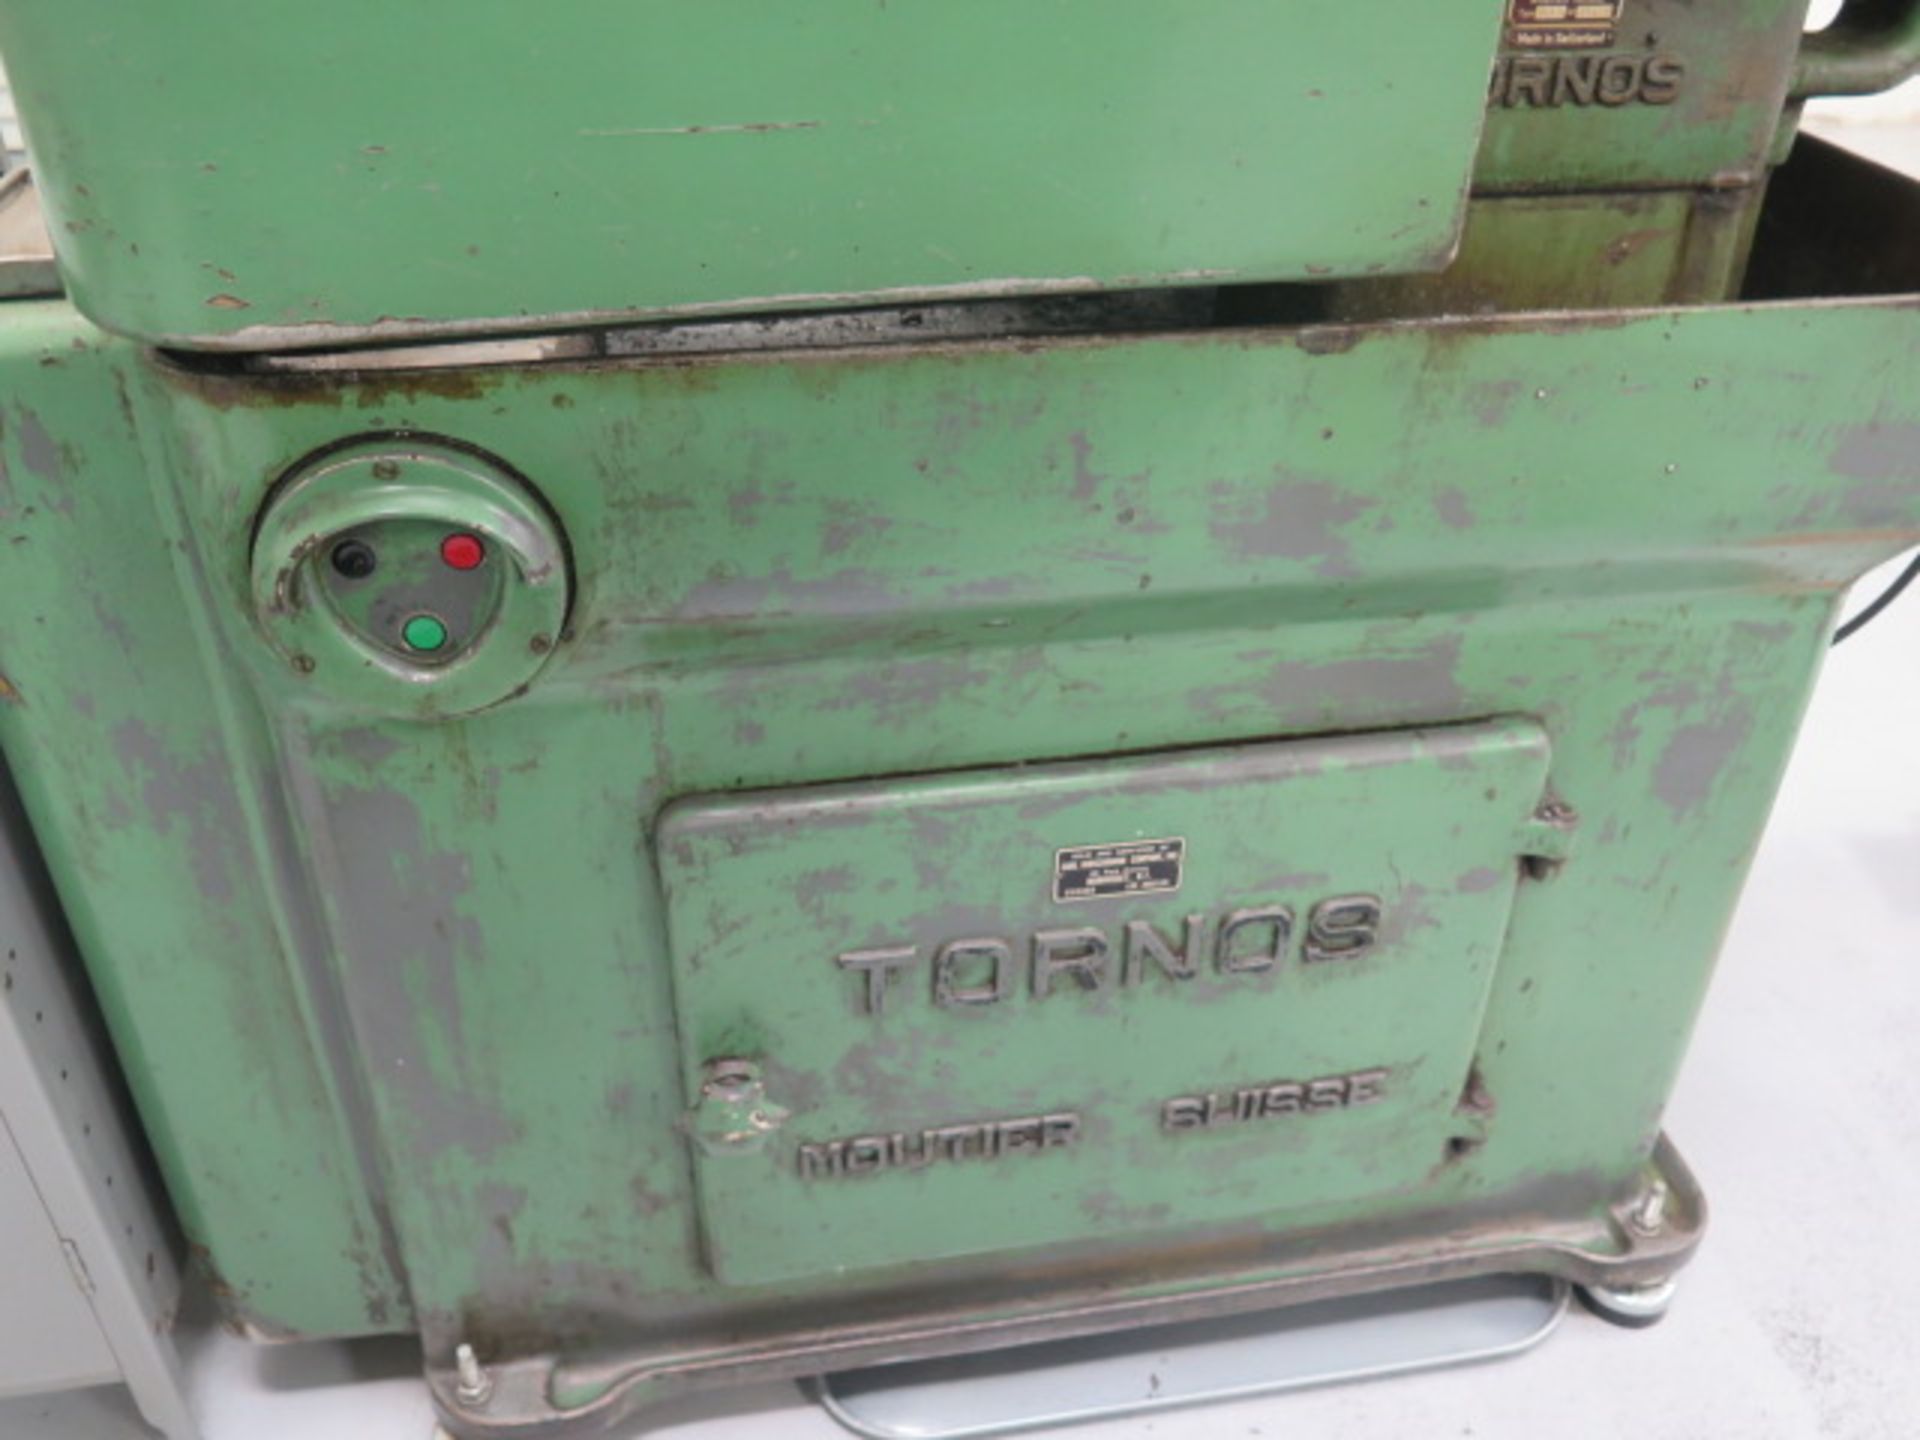 Tornos R10 10mm(.394”) Cap Automatic Screw Machine s/n 36465 w/ 5-Cross Slides, Type XII-U 3-Station - Image 4 of 14